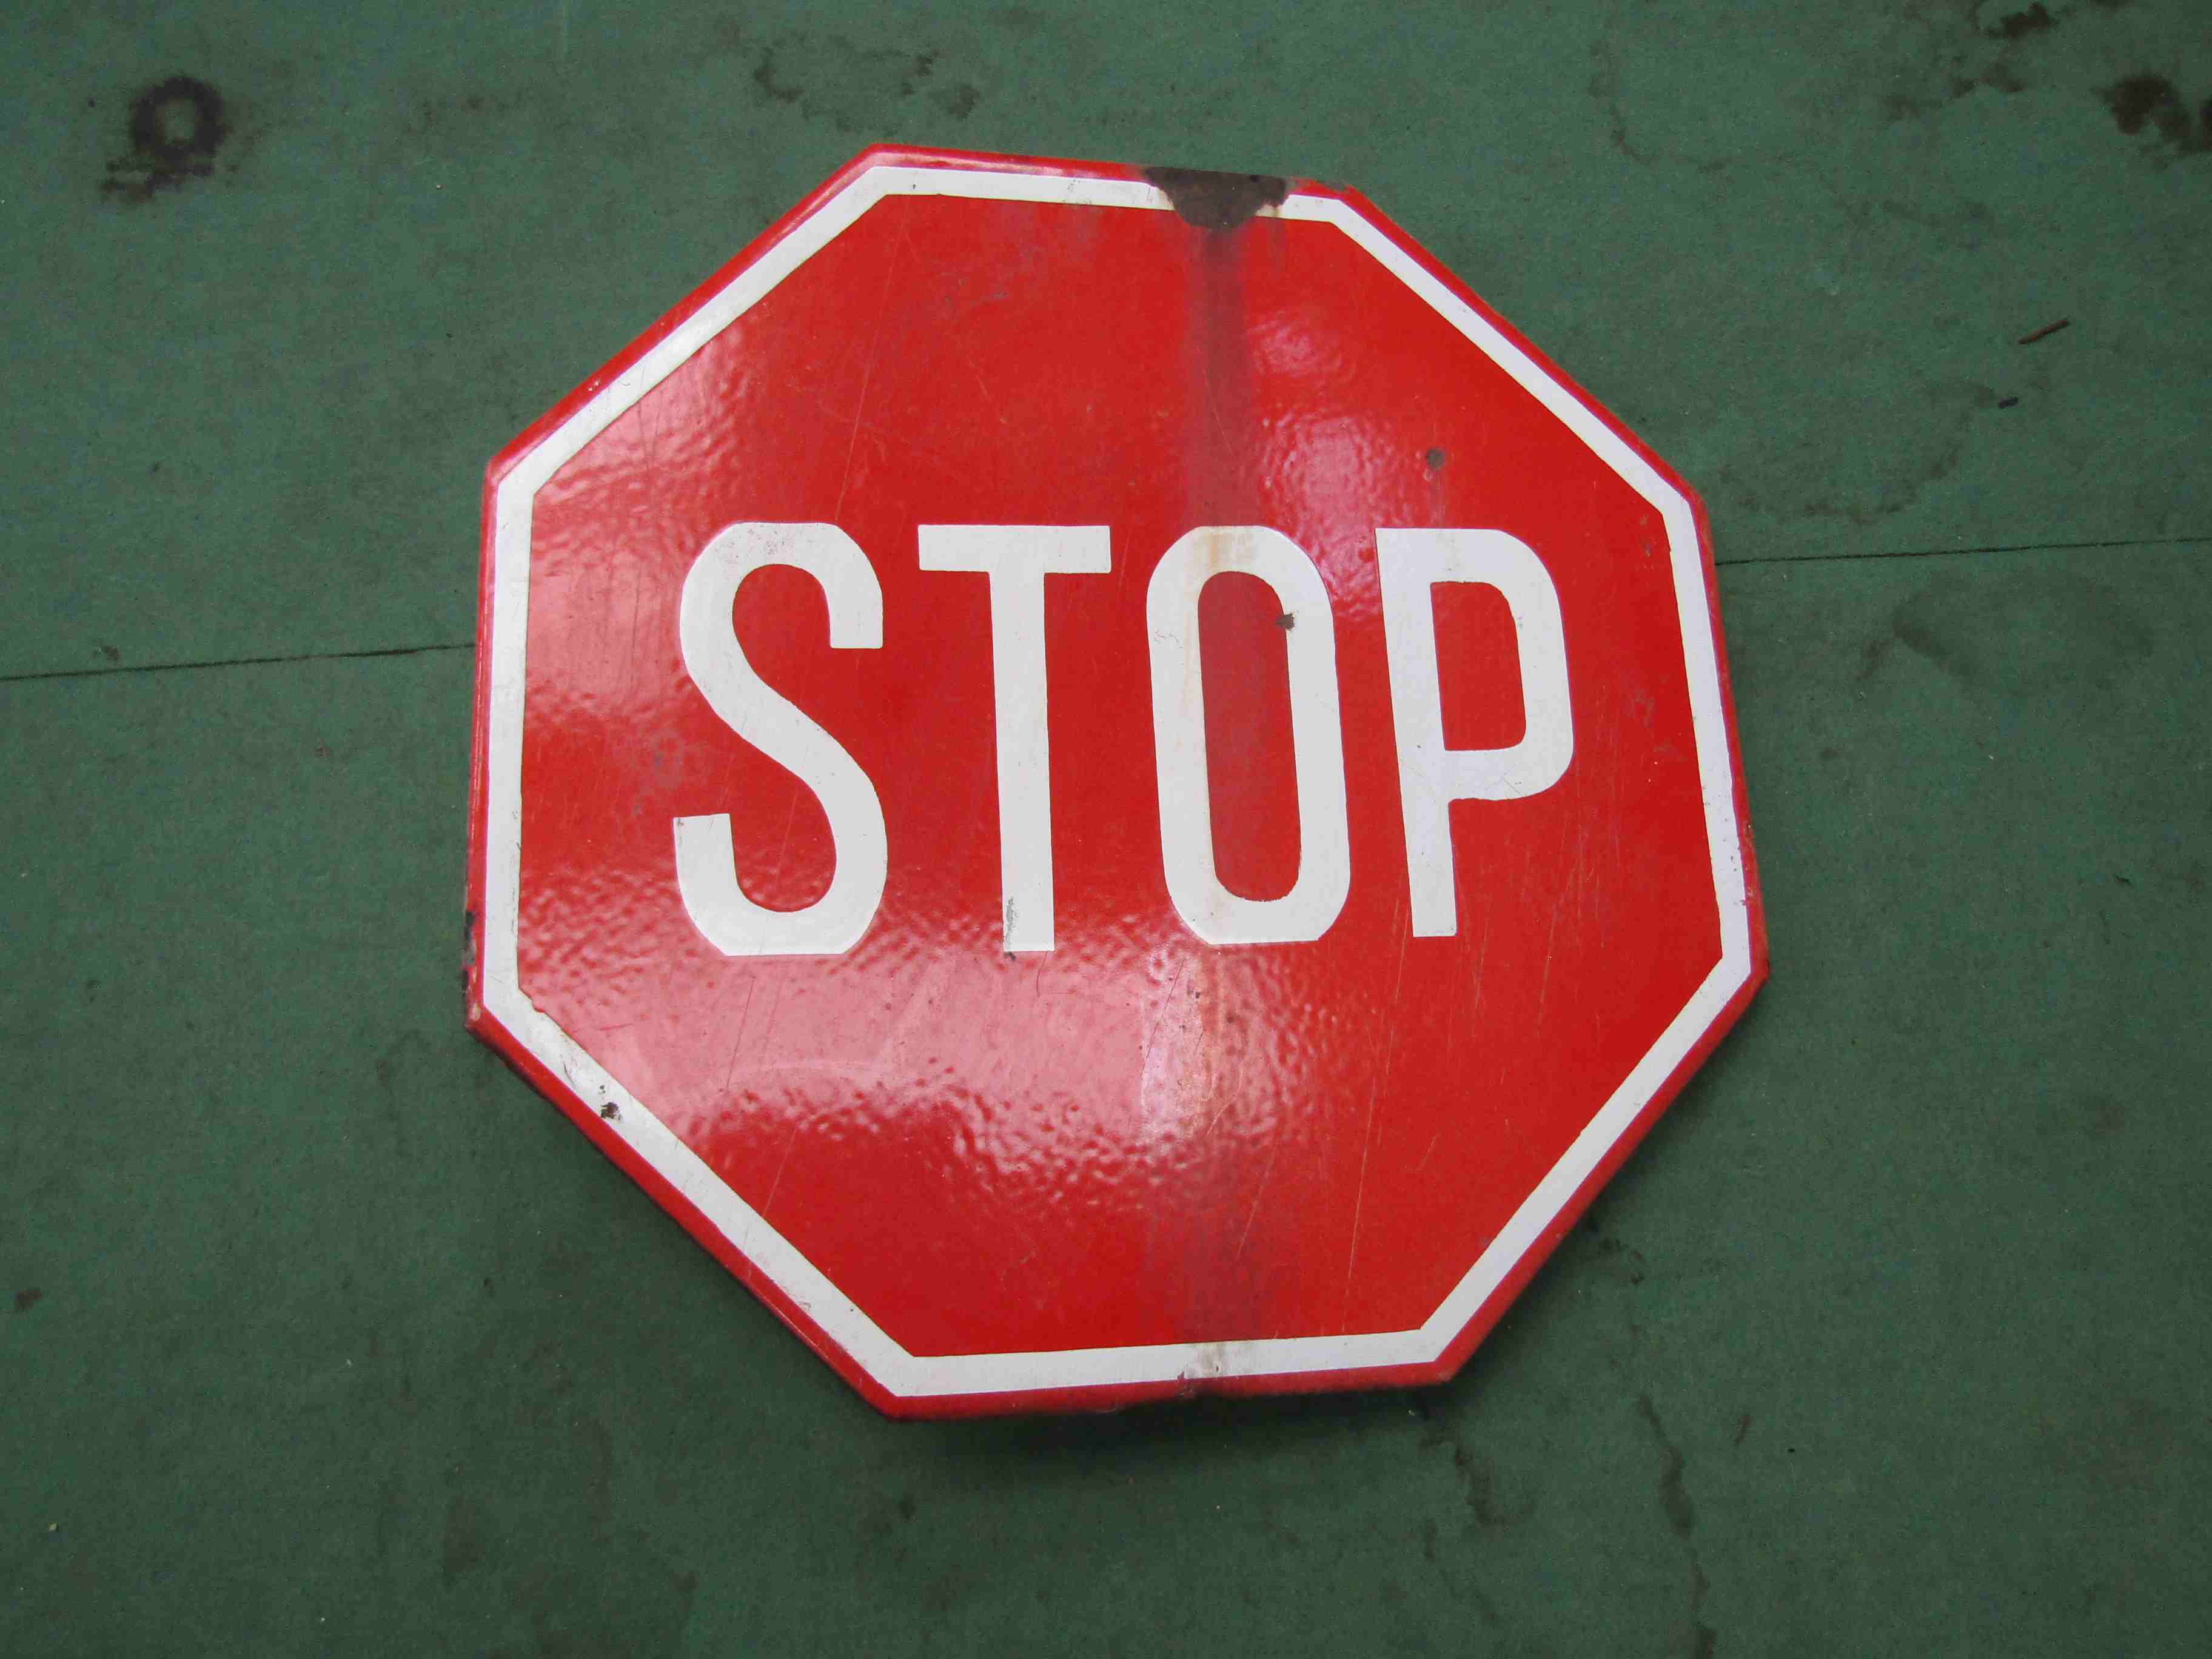 An enamelled hexagon "Stop" sign 60cm x 60cm